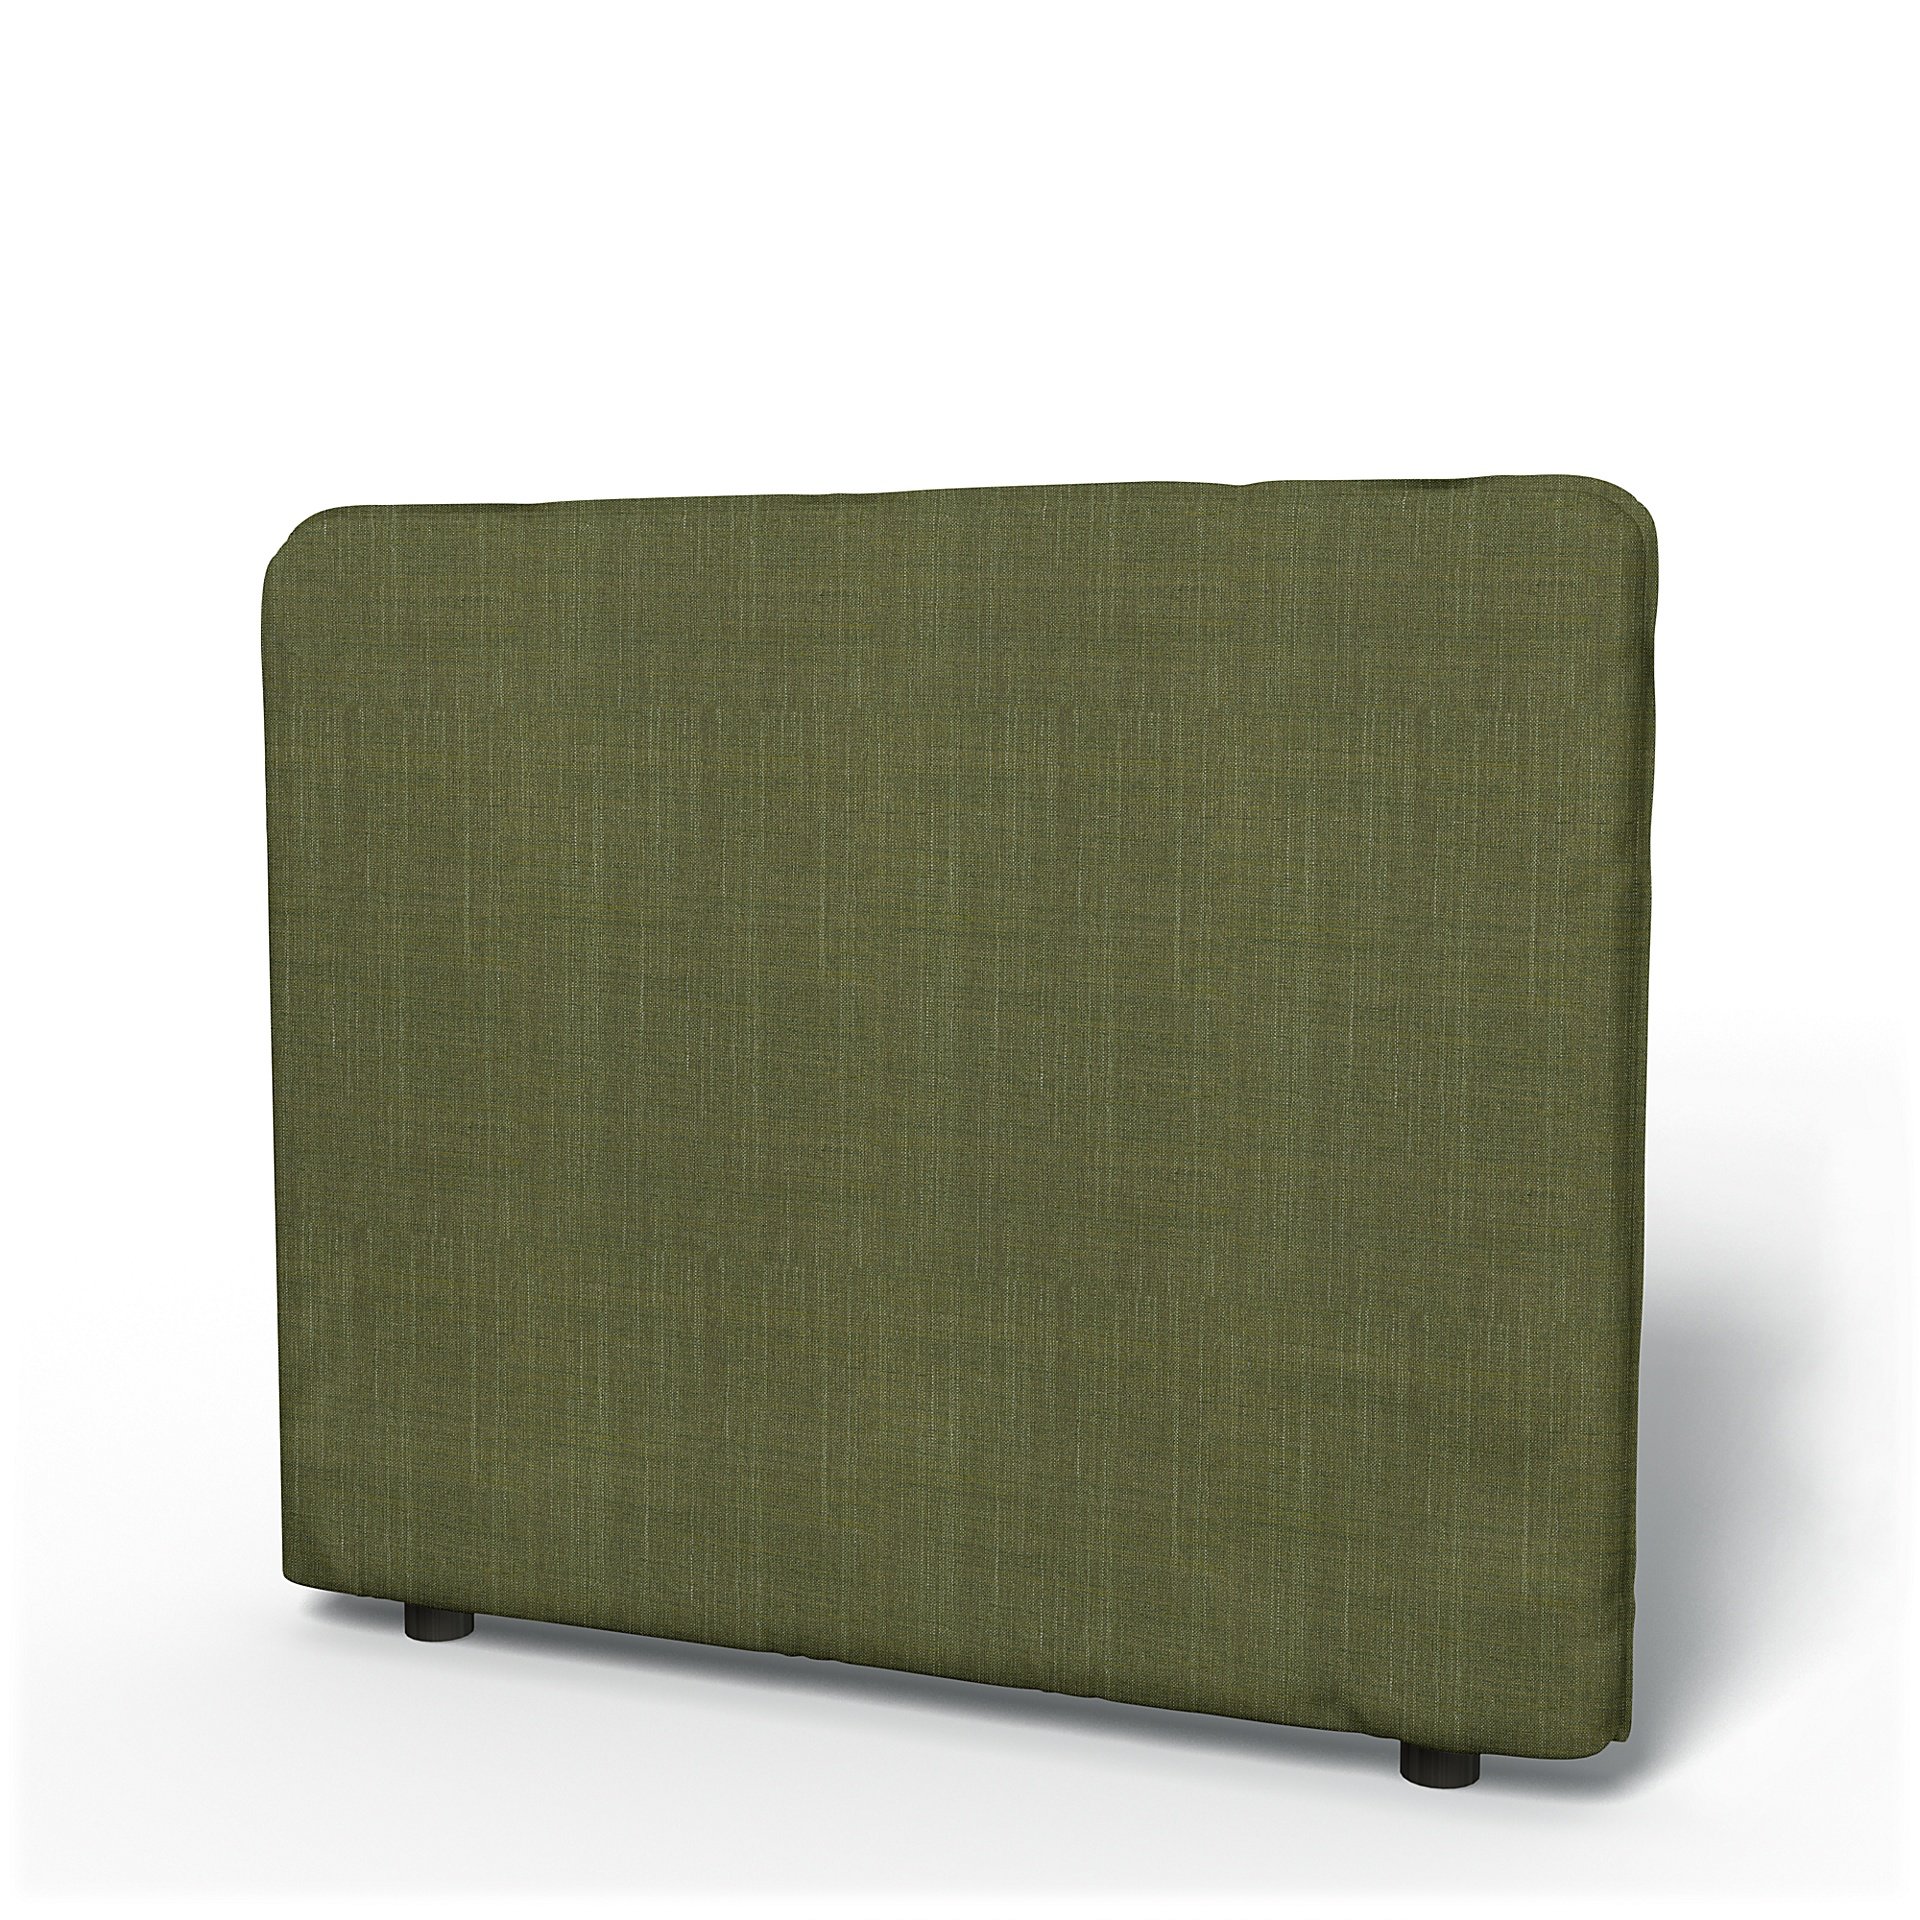 IKEA - Vallentuna Low Backrest Cover 100x80cm 39x32in, Moss Green, Boucle & Texture - Bemz